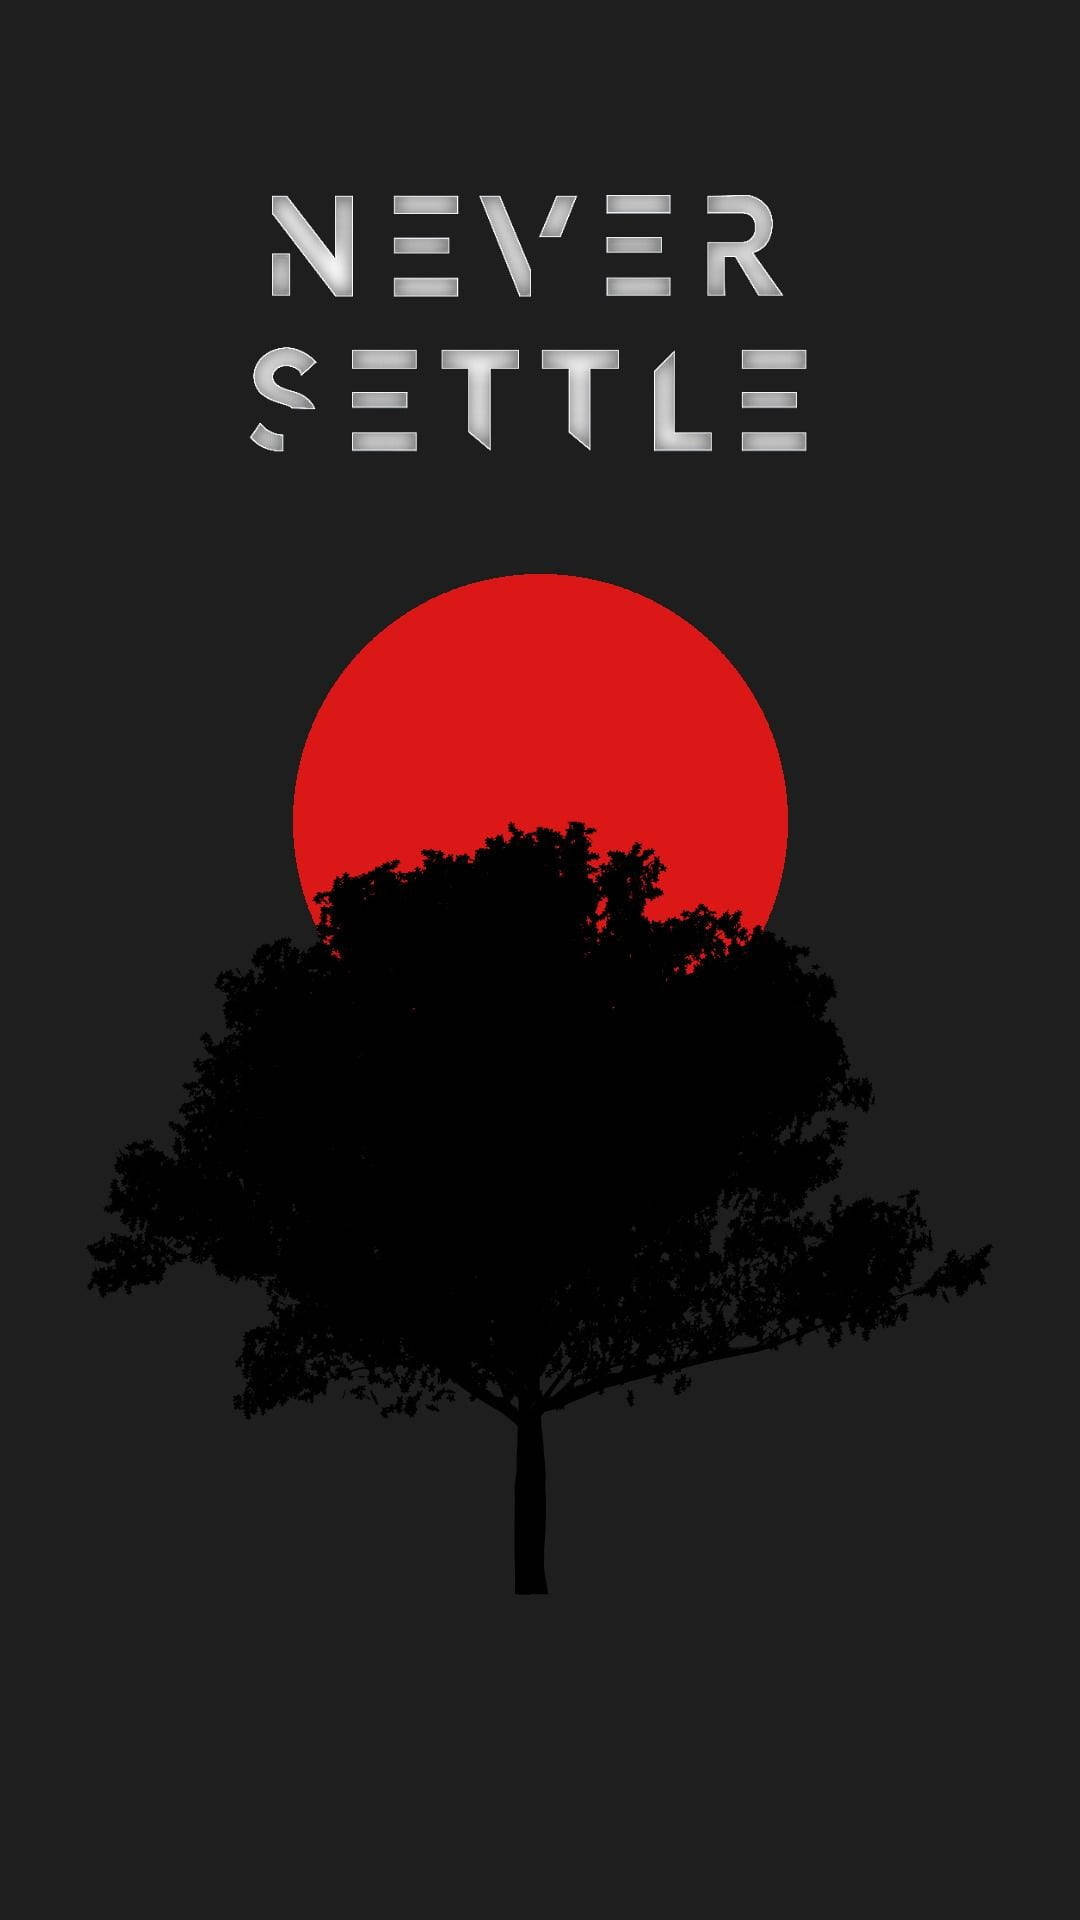 Never Settle Red Sun Tree